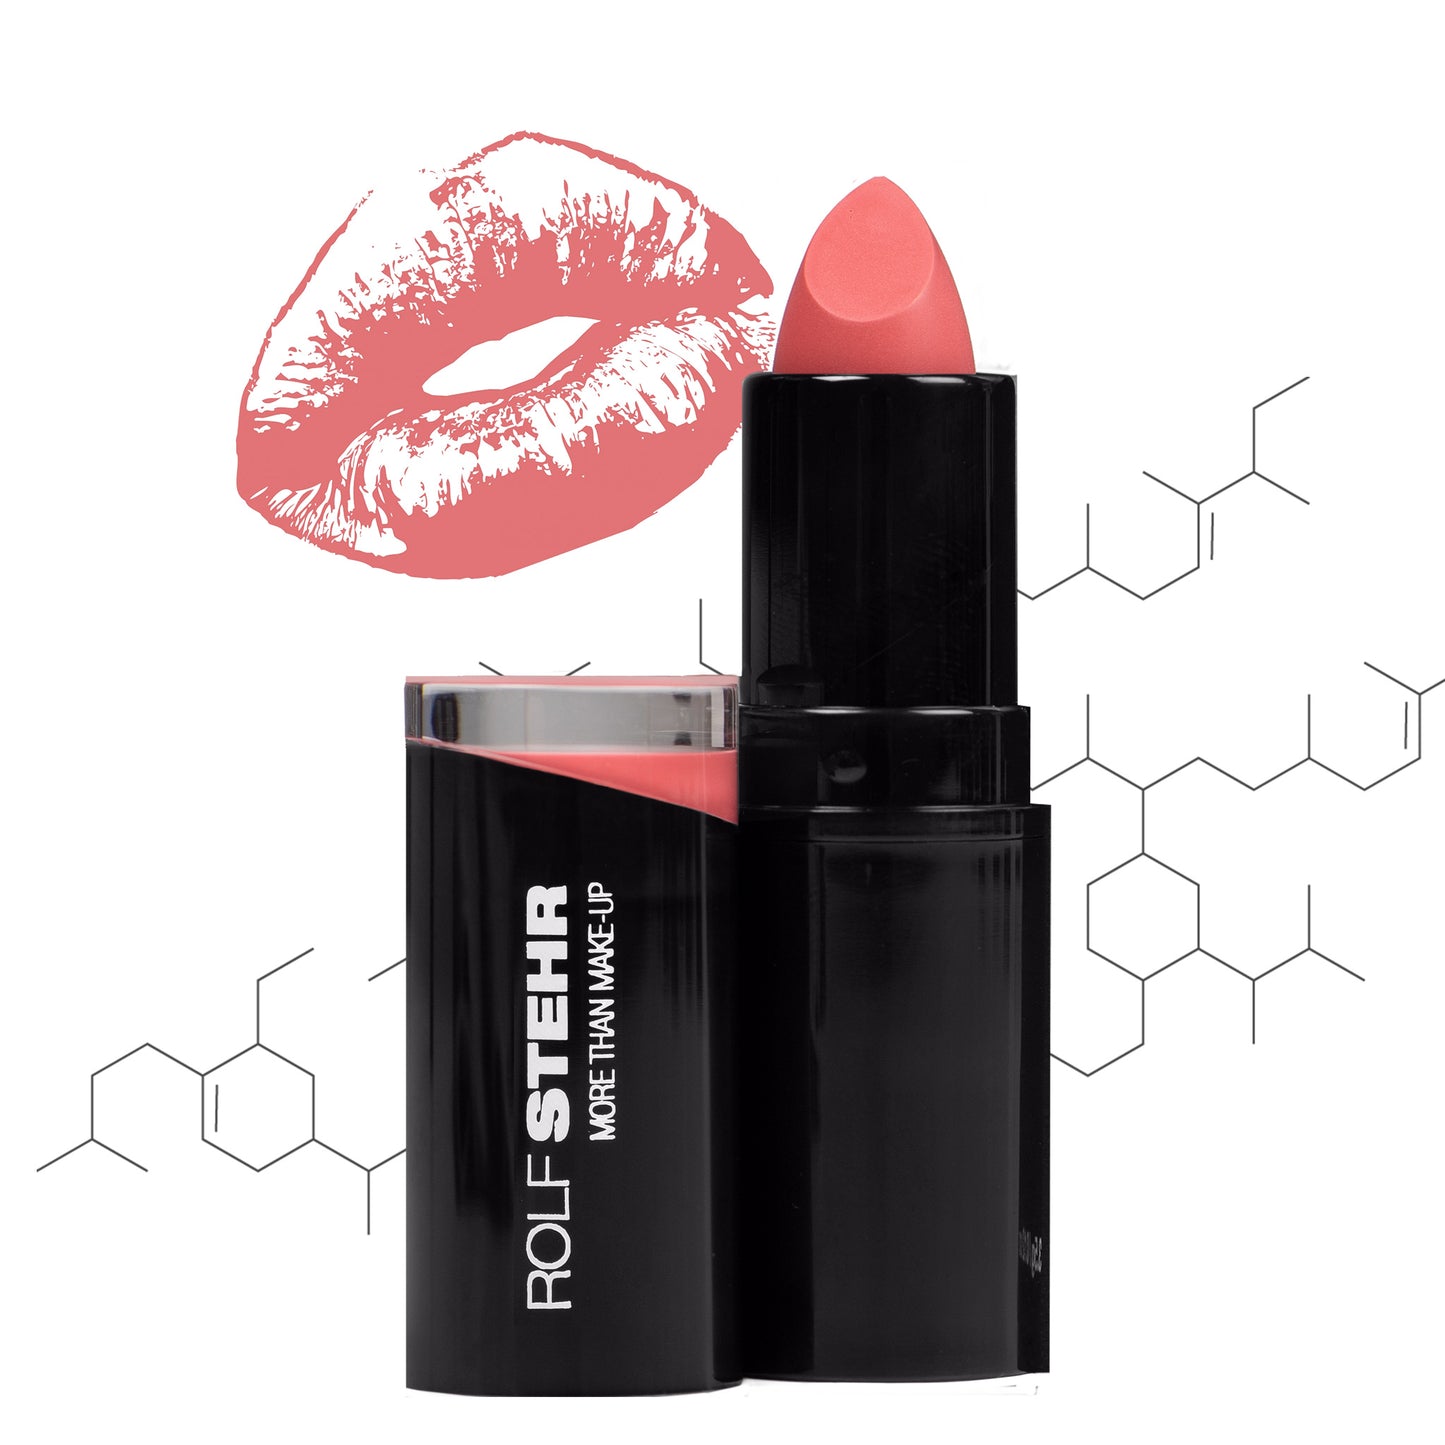 Lipstick Passion - Daylight 214 <br> More than Make up